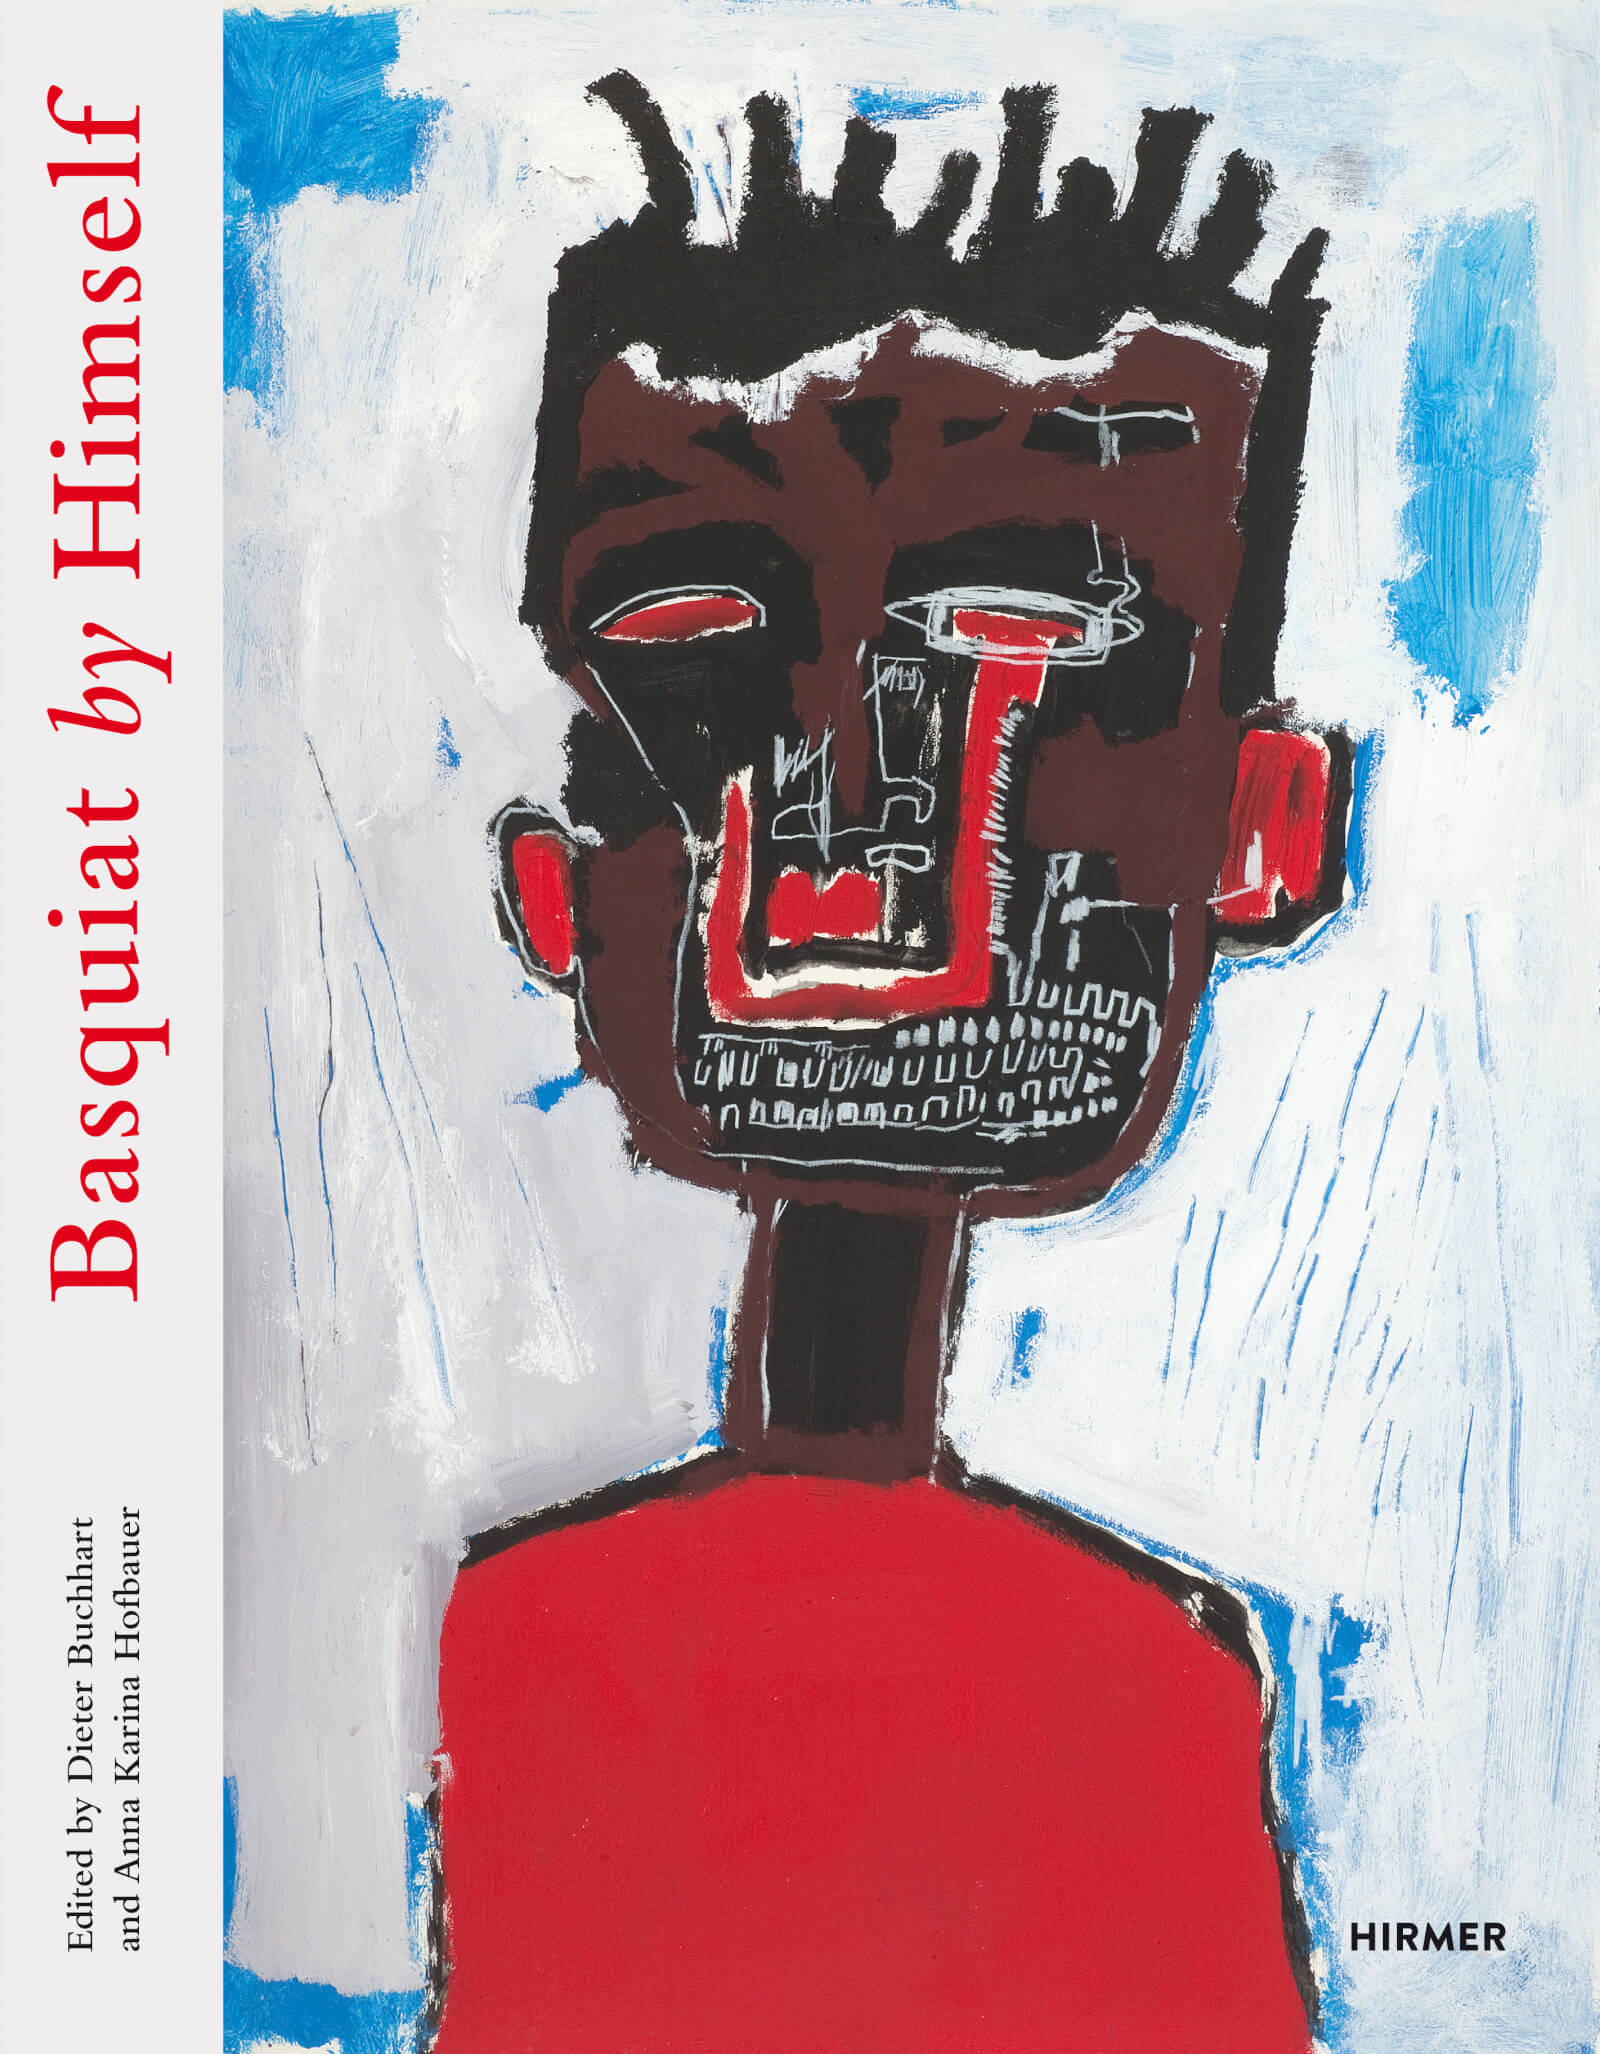 Basquiat by himself